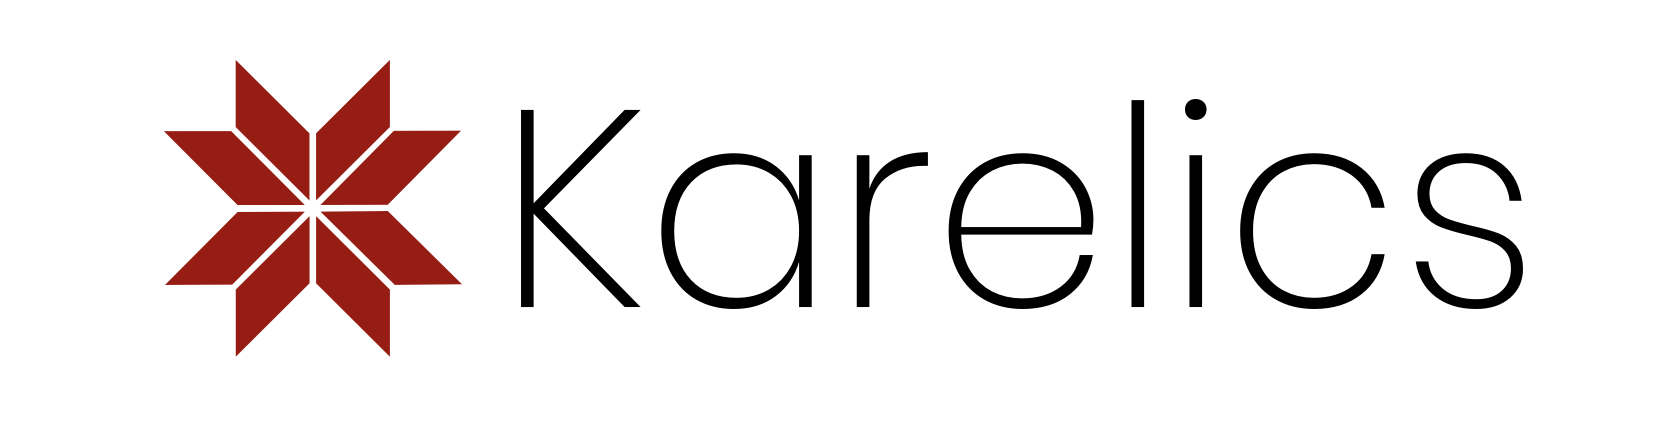 Karelics-logo-wide